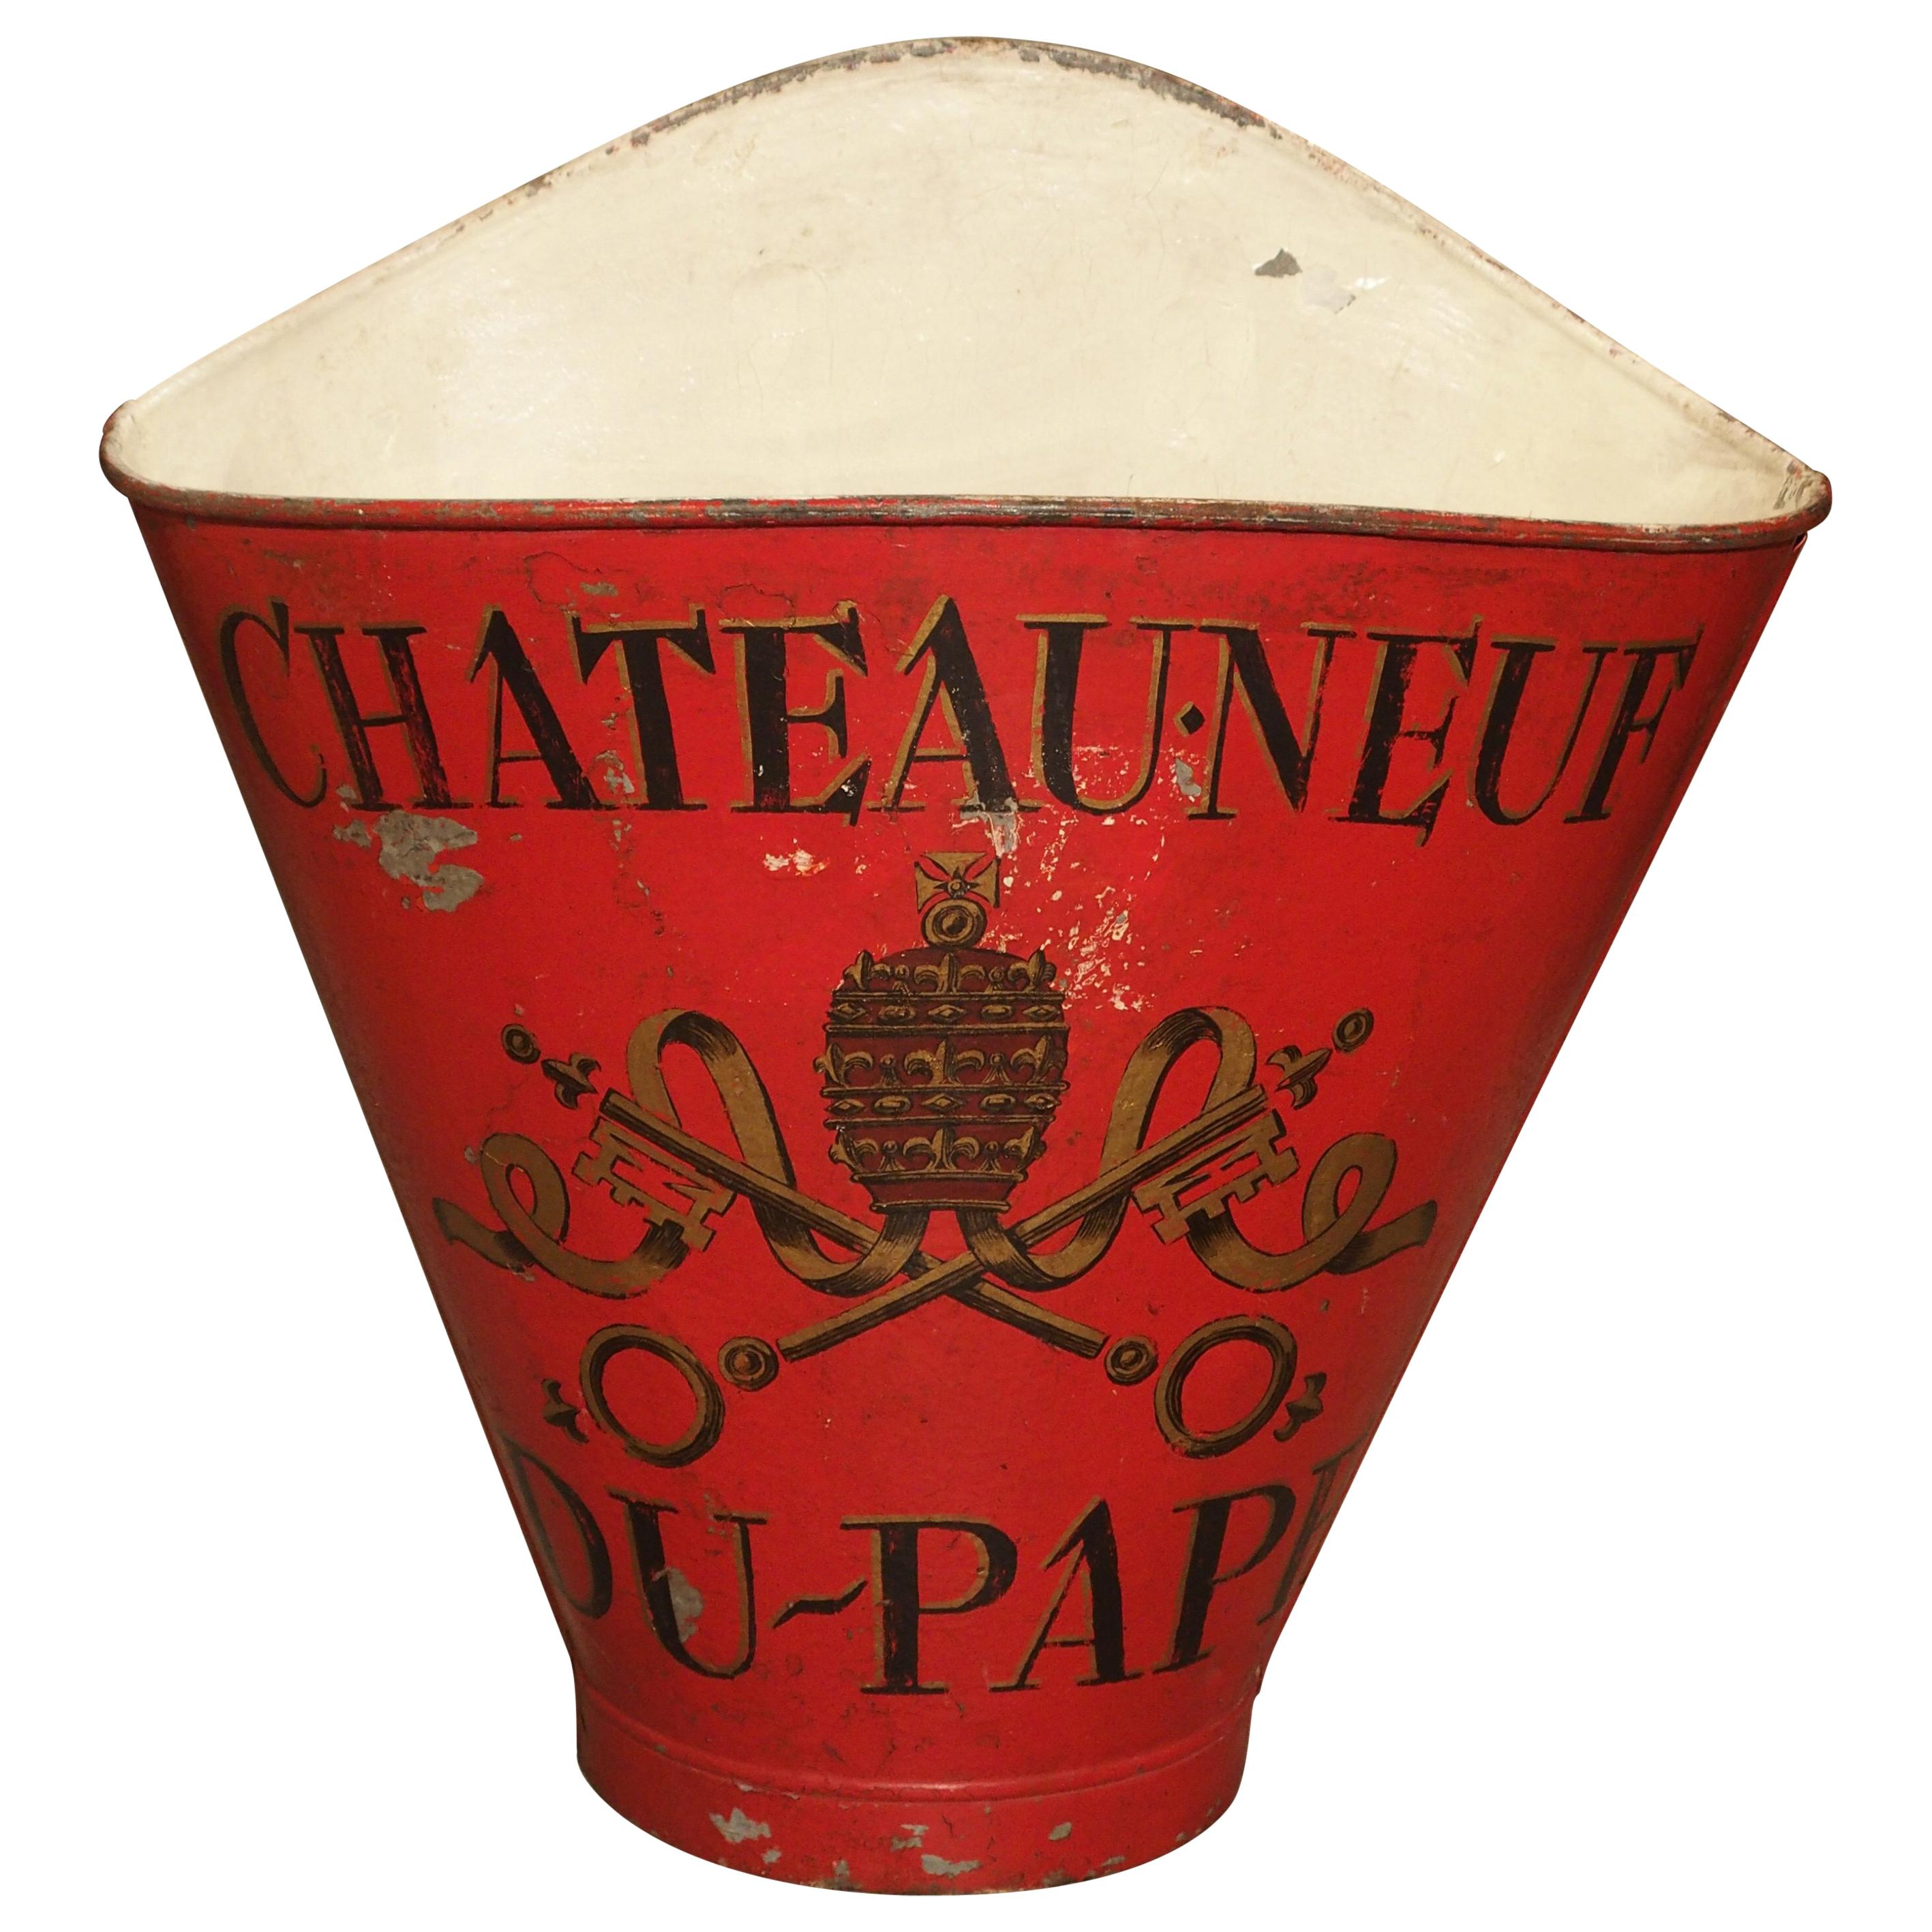 19th Century Chateauneuf Du Pape Grape Harvesting Hotte